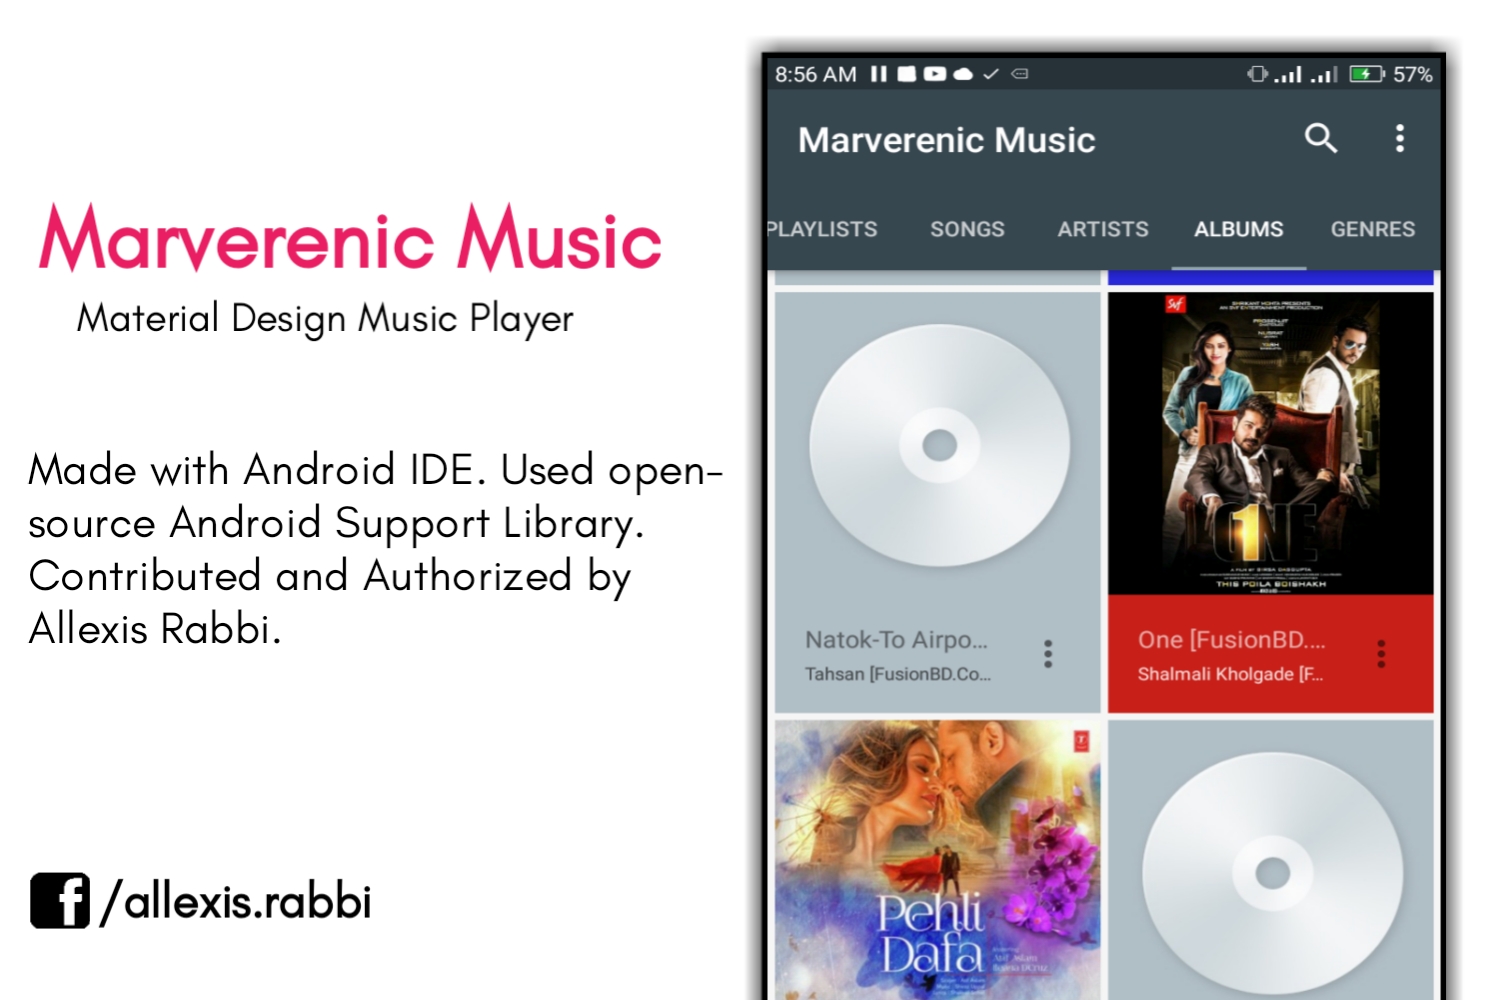 [AIDE-5] :: Android IDE এর মাধ্যমে অ্যাপ তৈরি || Material Design এর জনপ্রিয় Marverenic Music এর মতো Same অ্যাপ তৈরি করুন||